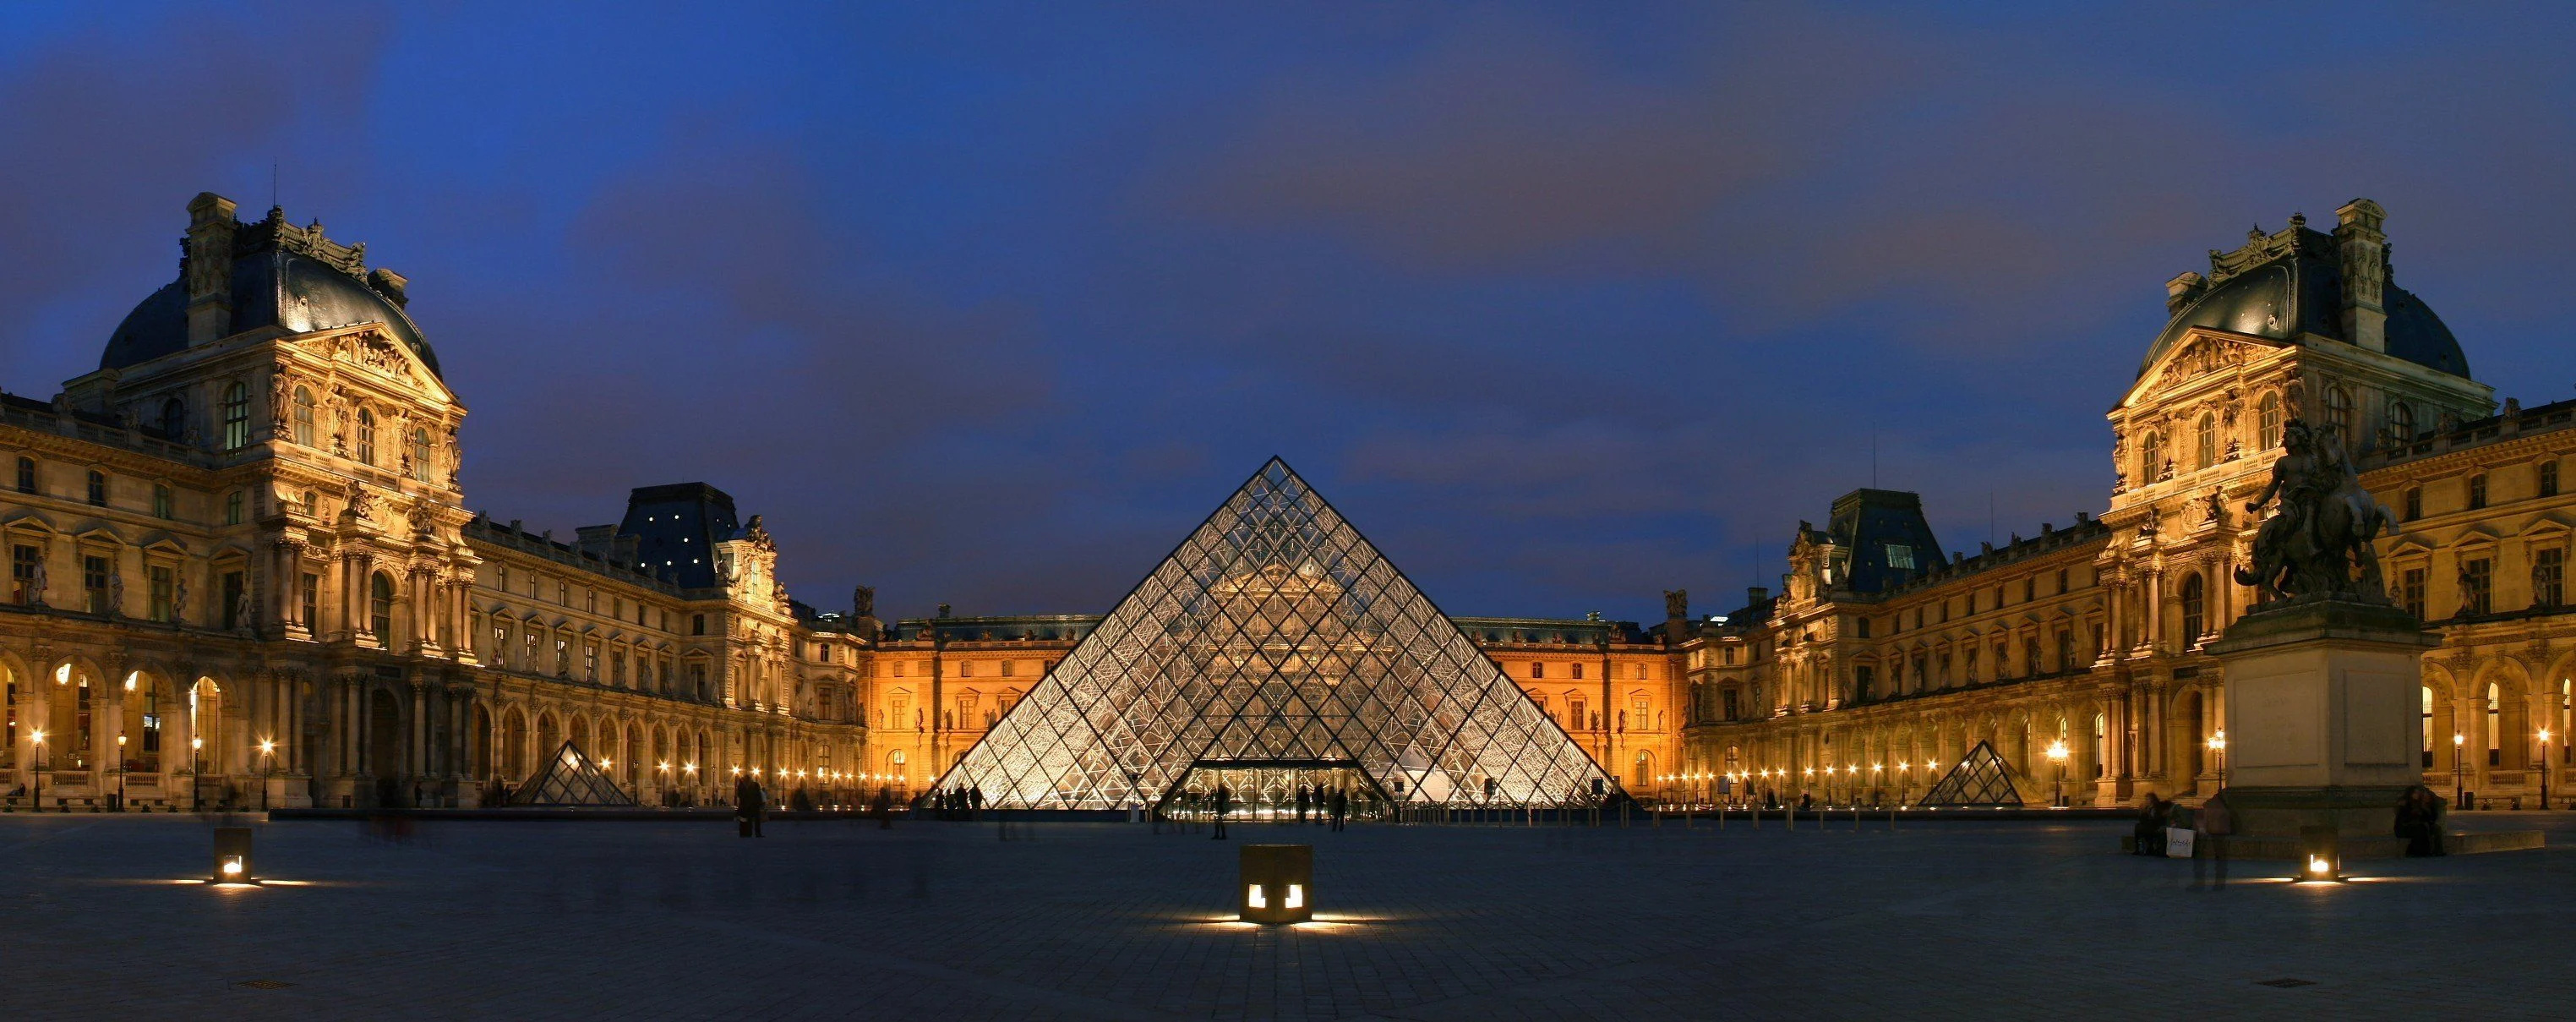 Louvre wallpaper collection, Artistic marvels, Cultural heritage, Iconic landmark, 3050x1210 Dual Screen Desktop